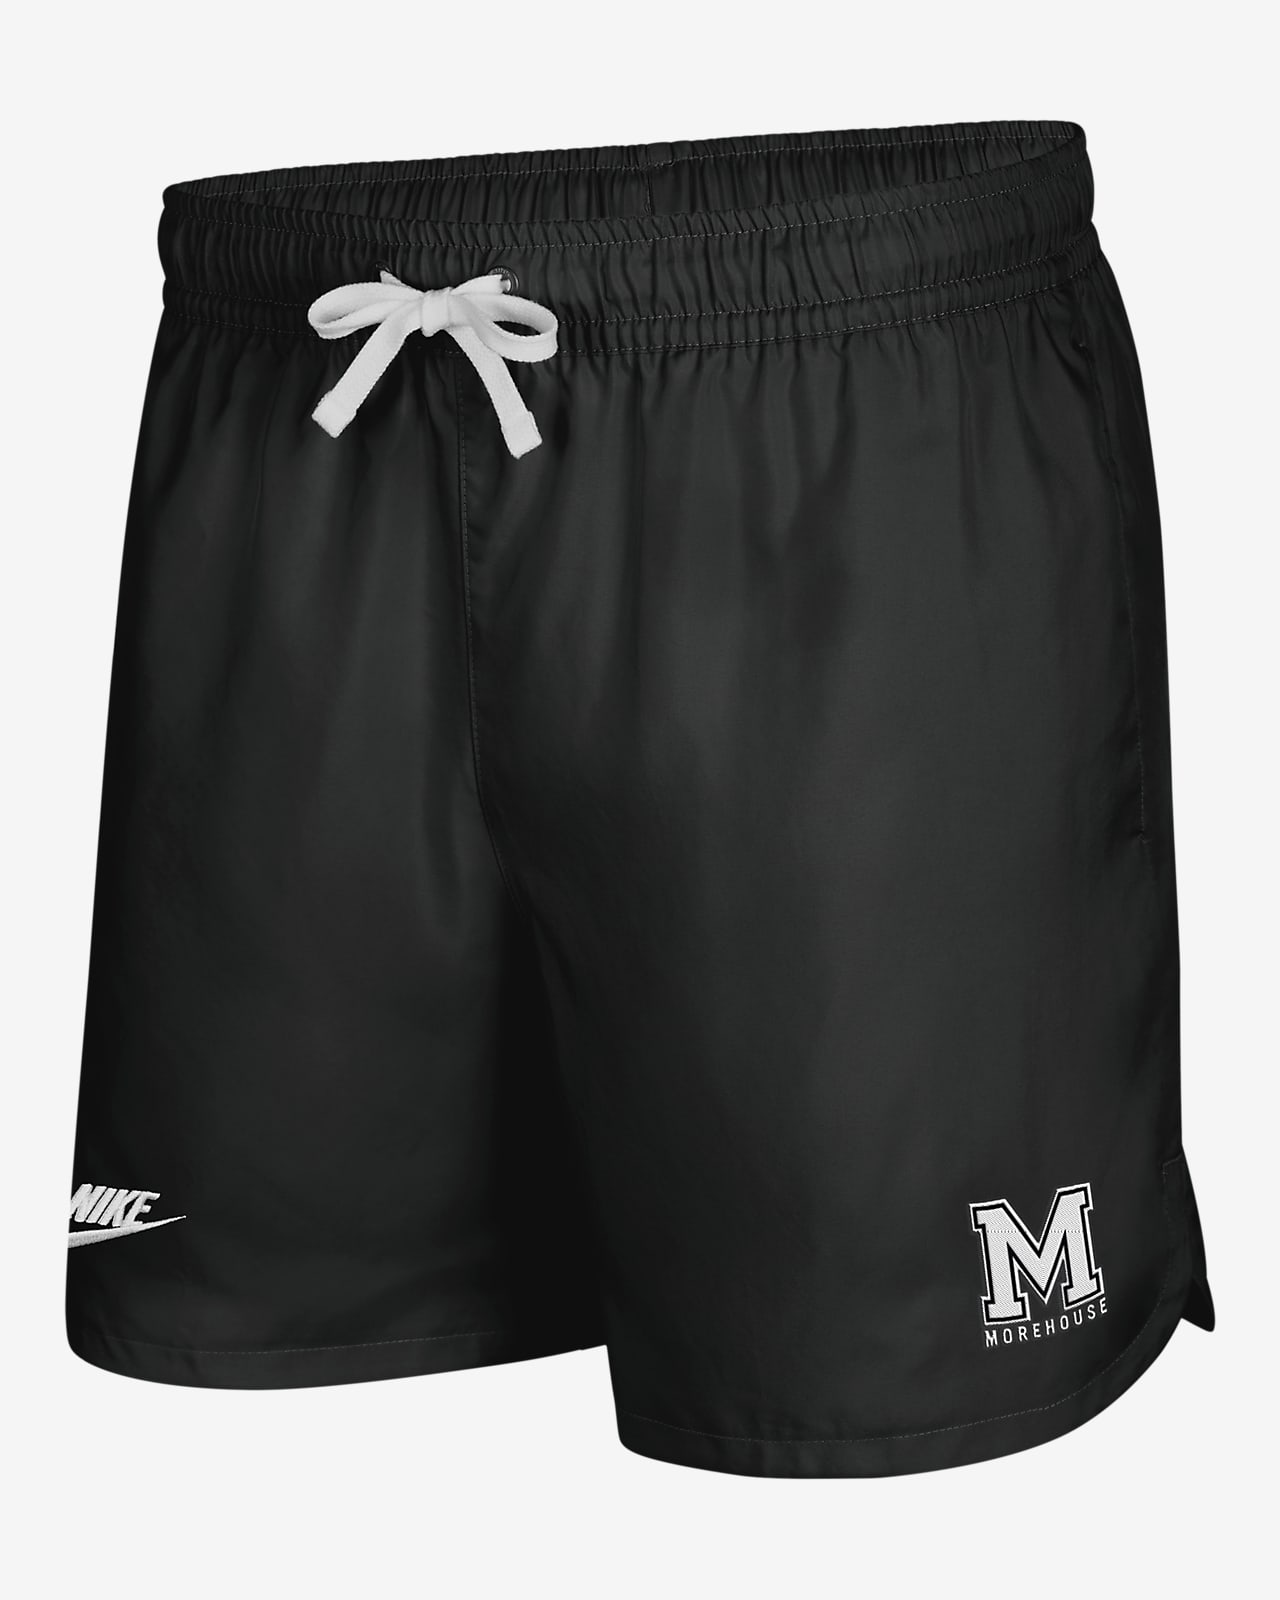 Morehouse Men's Nike College Flow Shorts